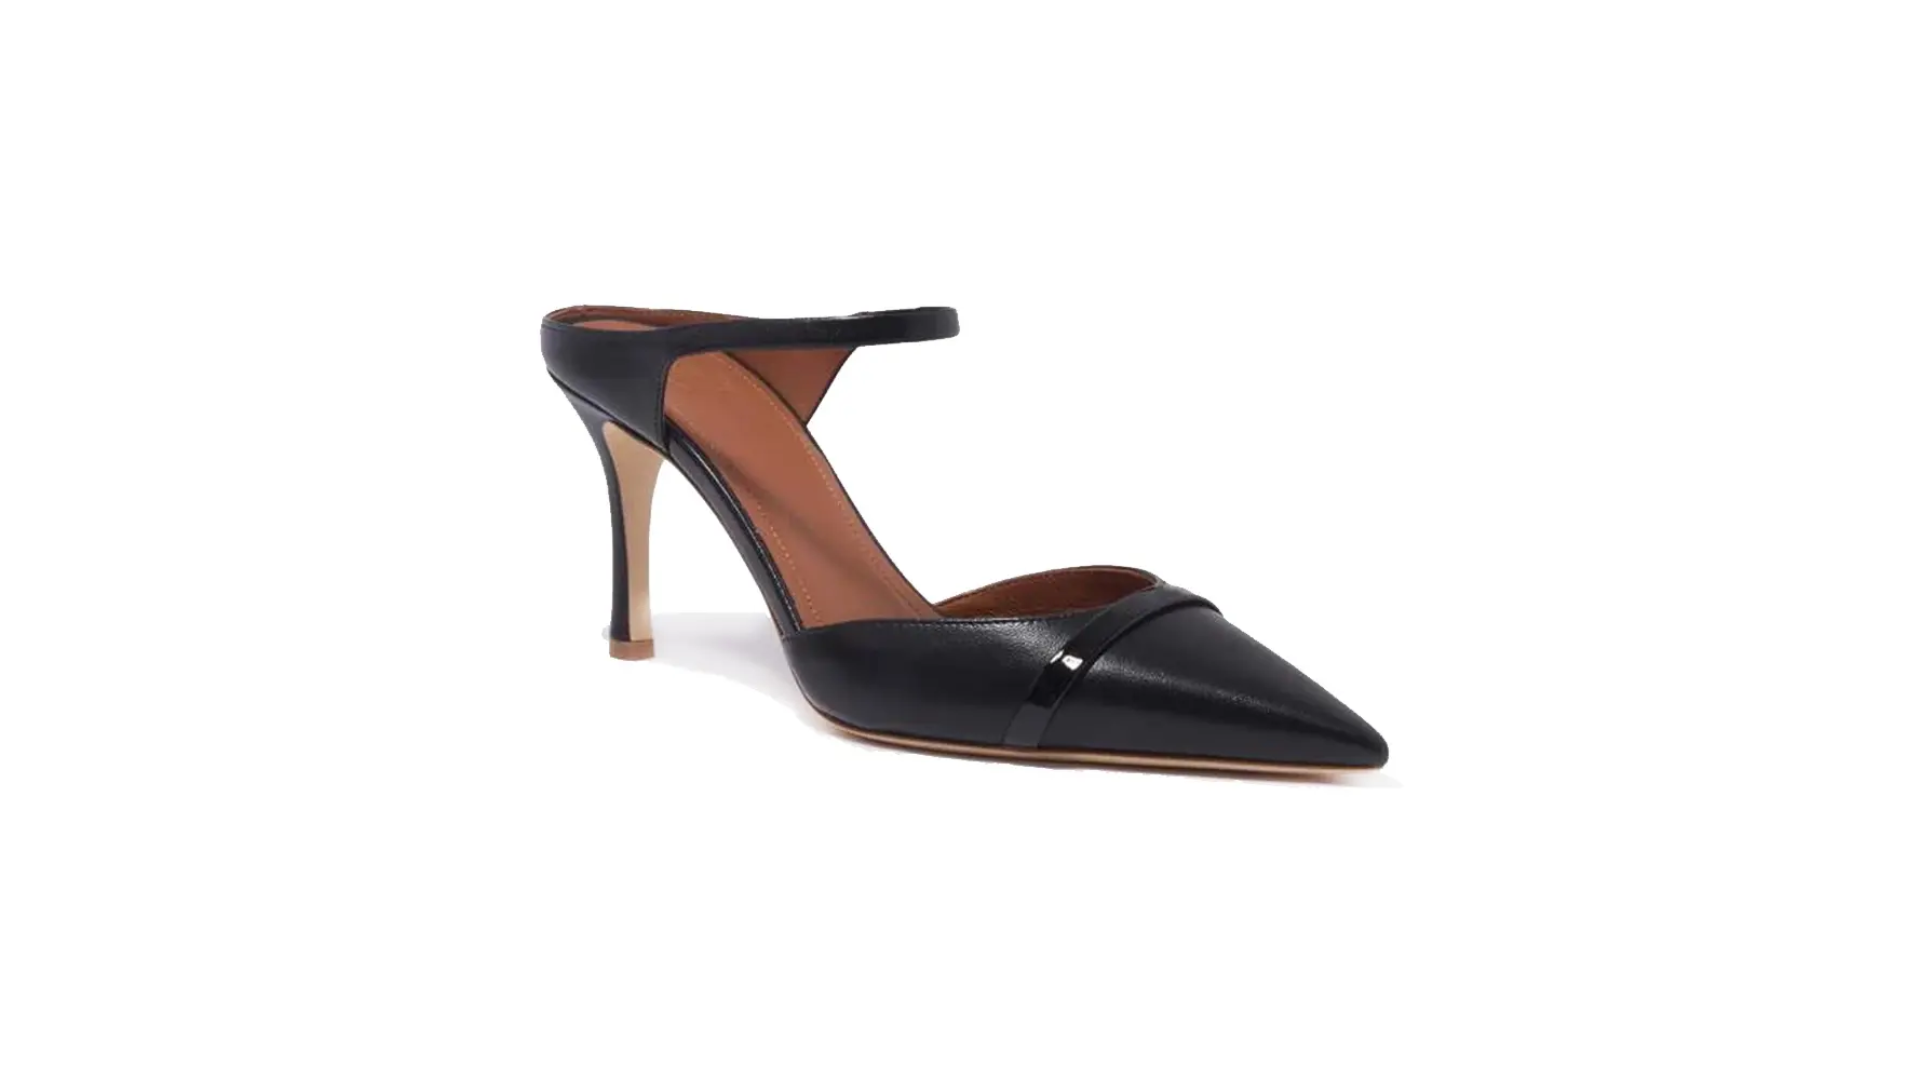 Rekomendasi heels branded minimalis